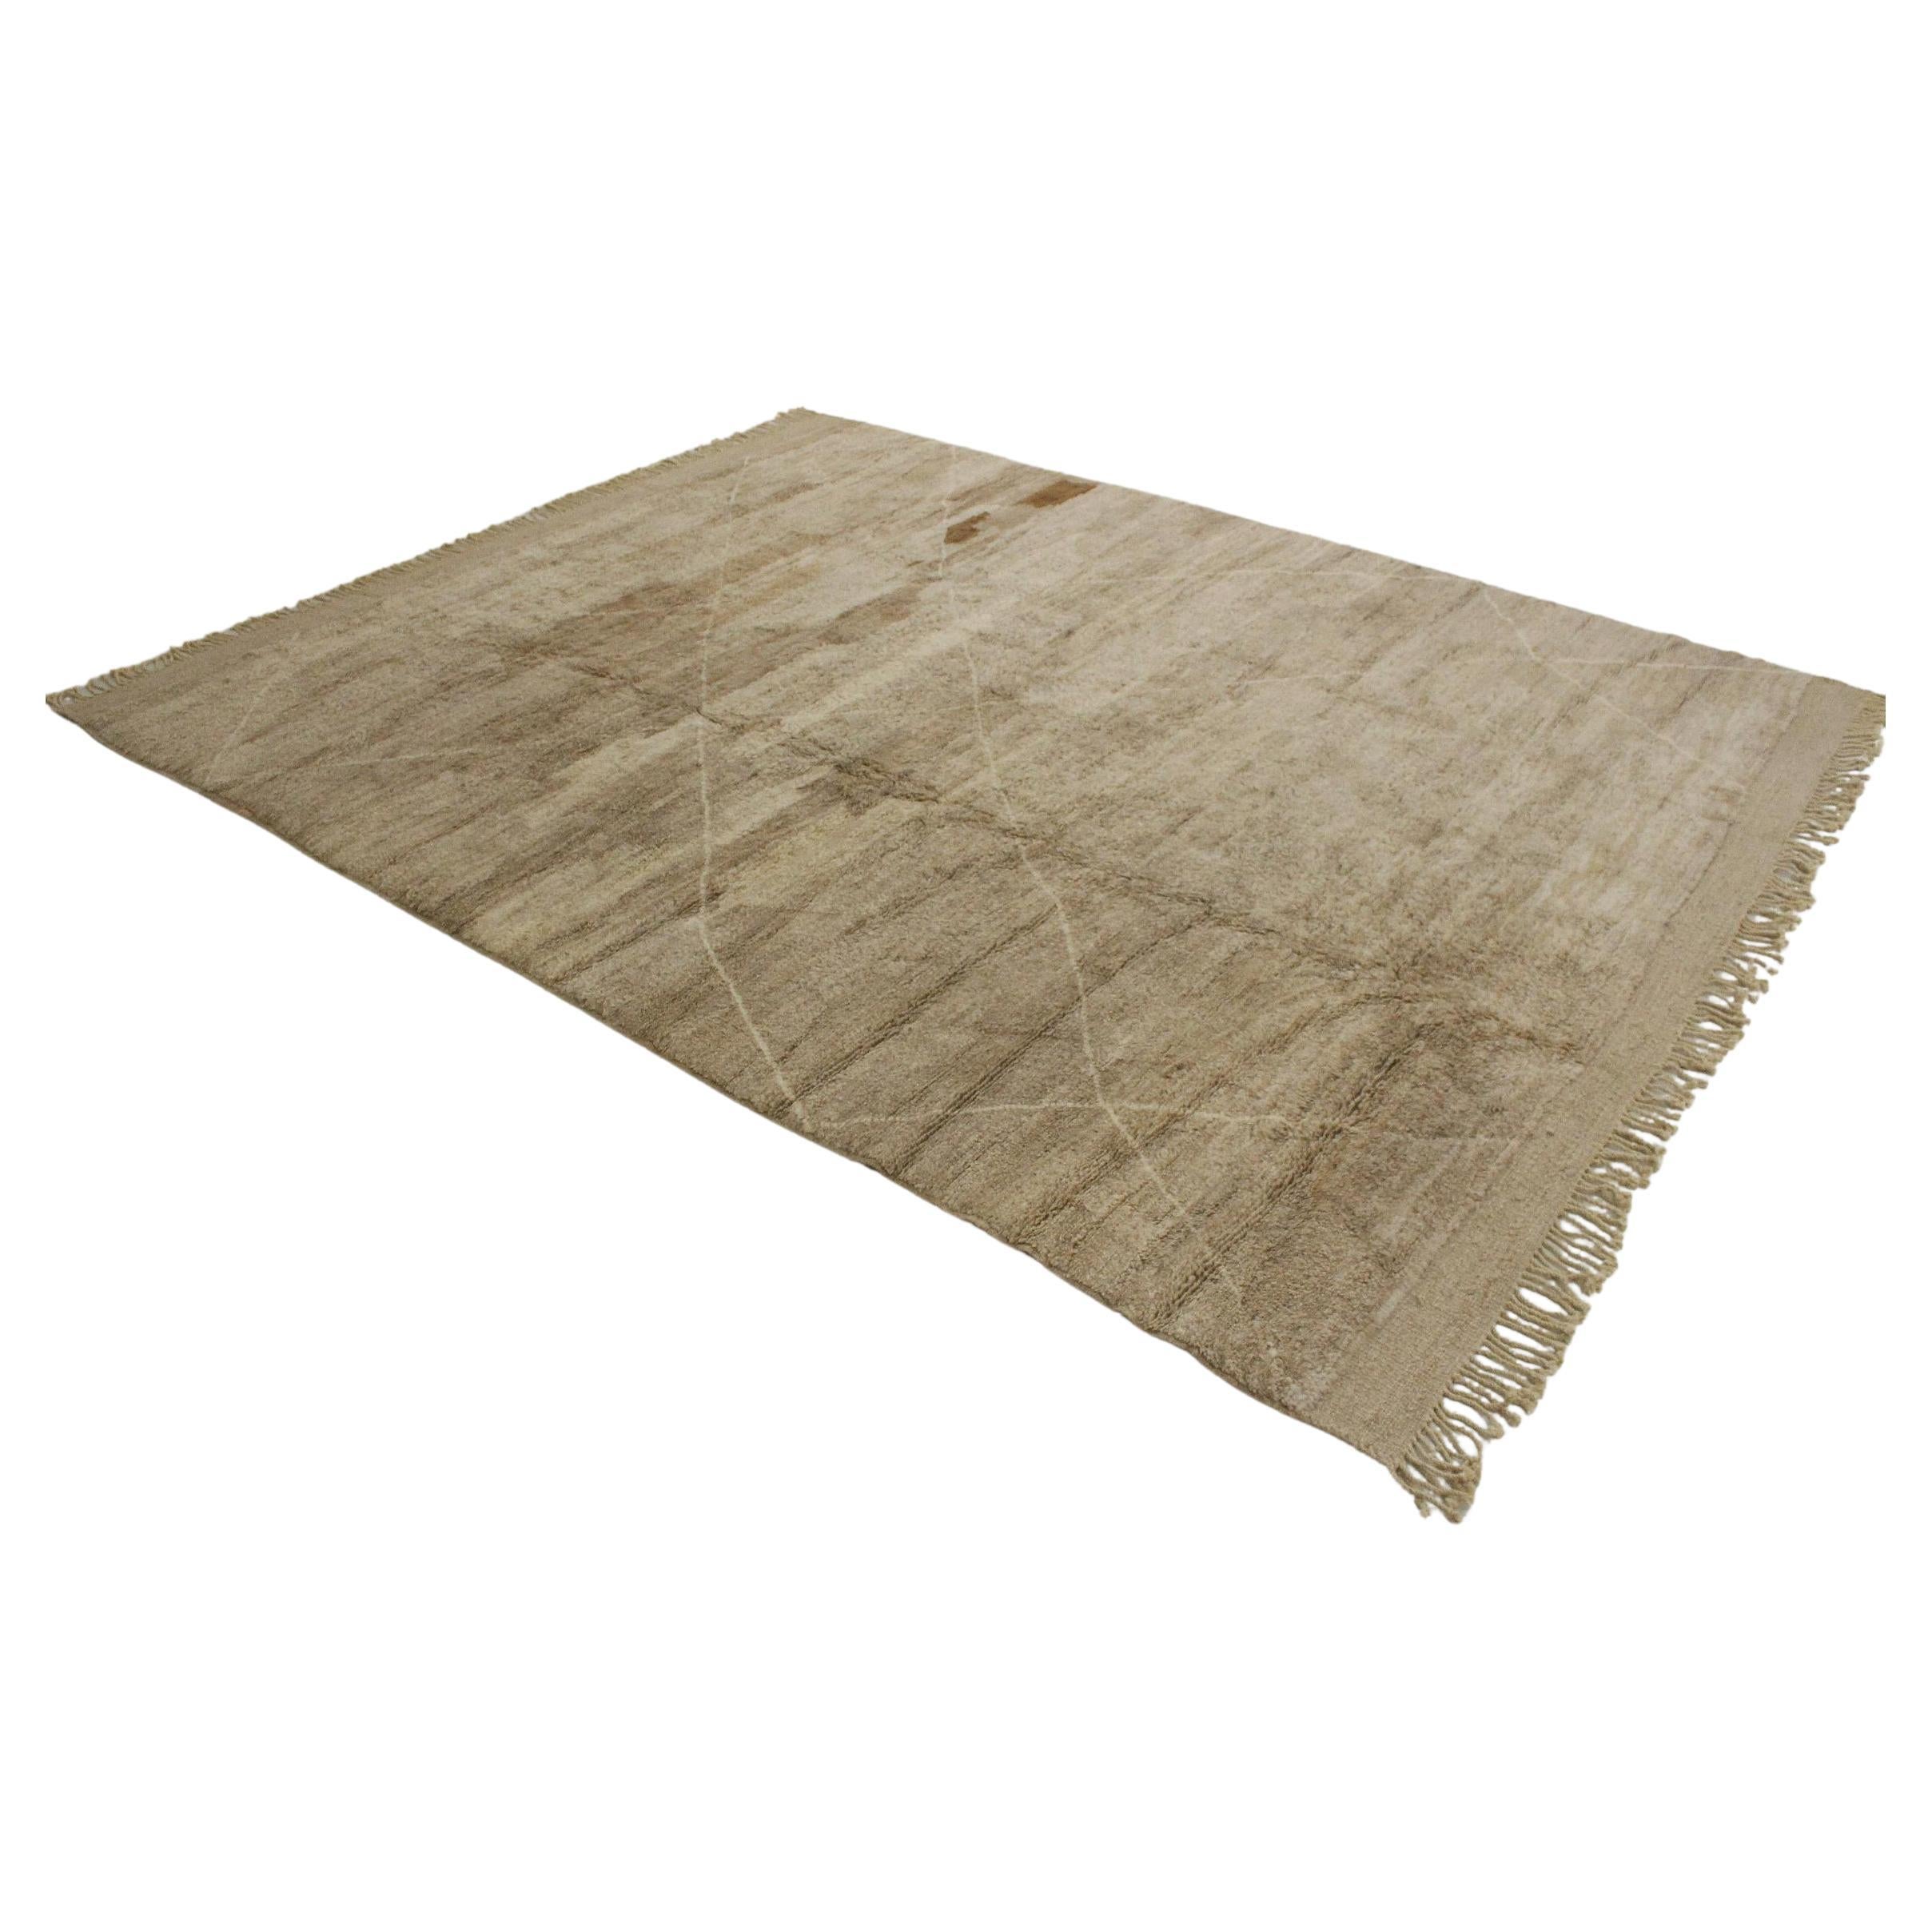 Skandinavischer Mrirt-Teppich aus marokkanischer Wolle - Beige/Braun - 10.3x13feet / 315x398cm